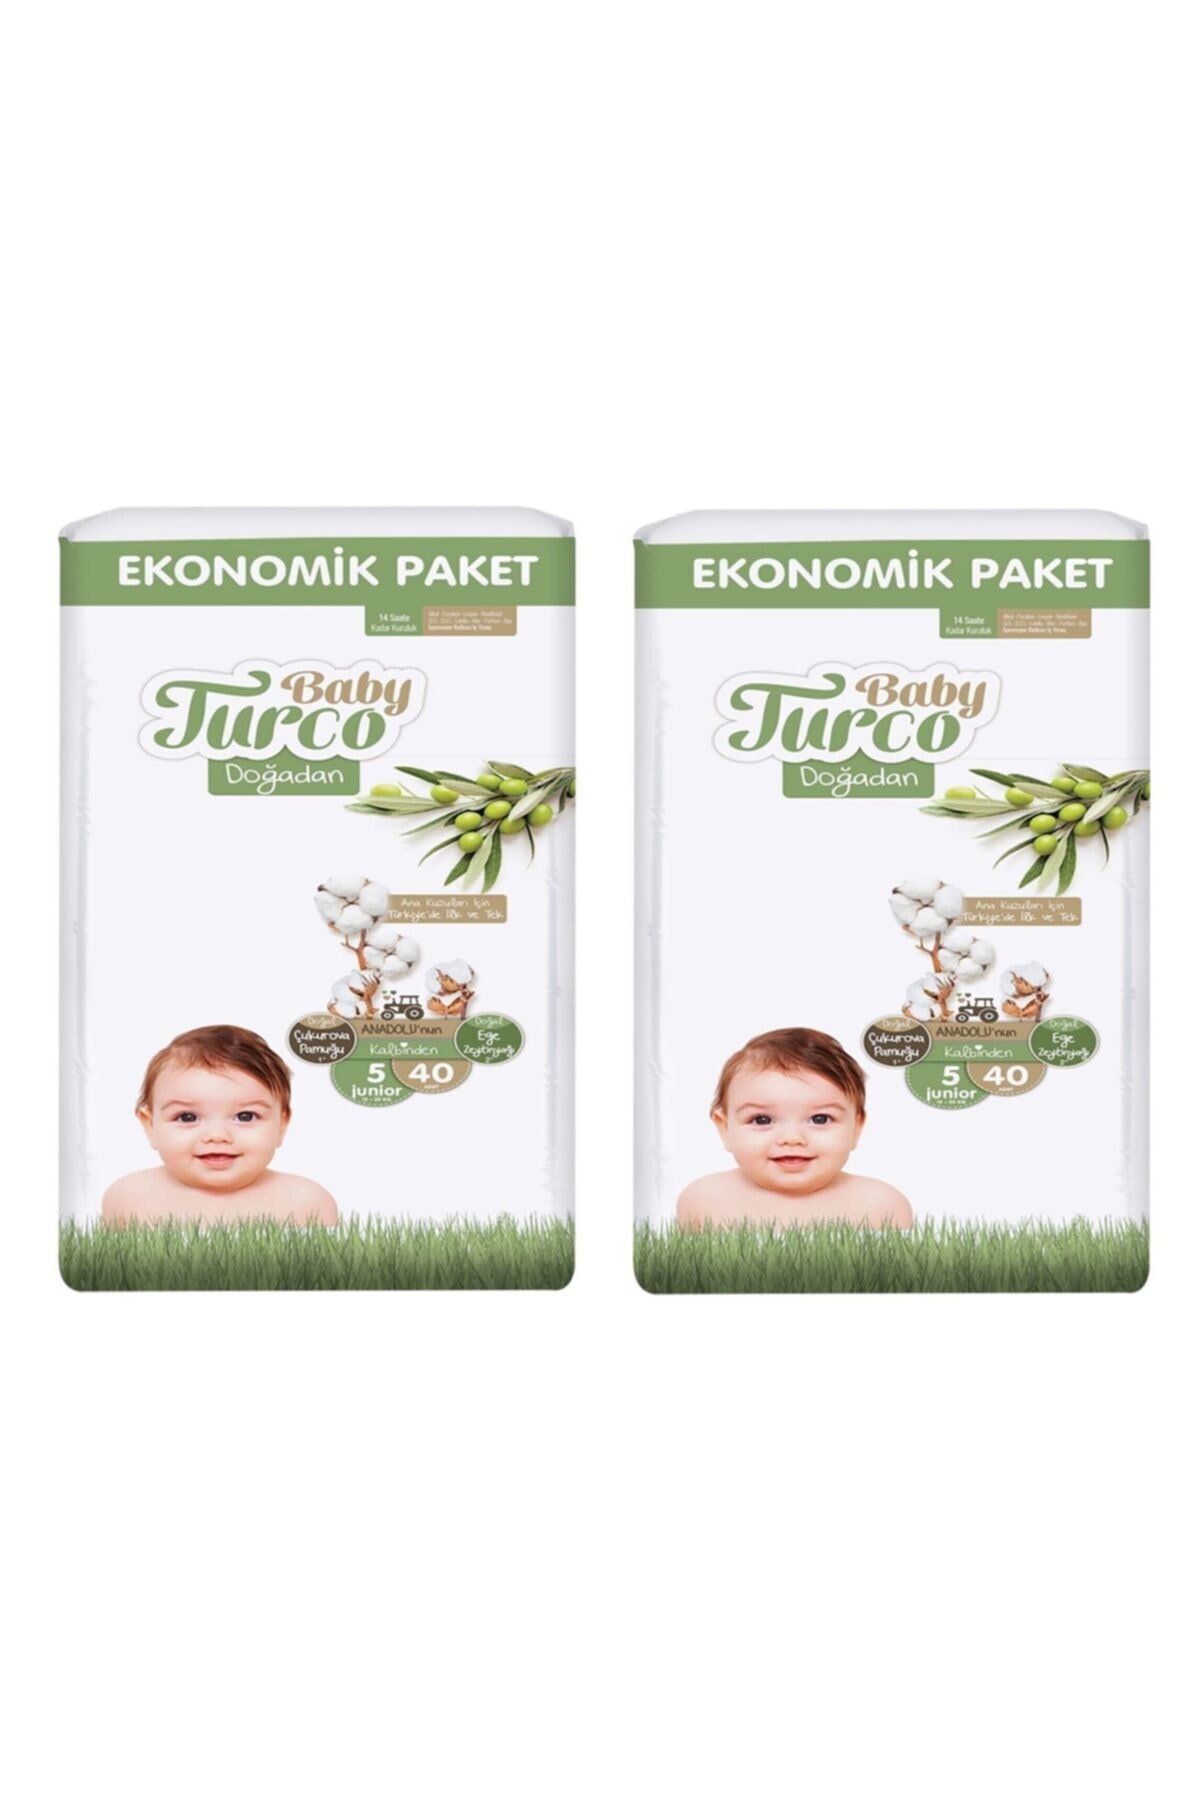 Baby Turco Bebek Bezi Ekonomik Paket 40'li (5 Numara) 8682241205950 2 Paket 80 Adetli